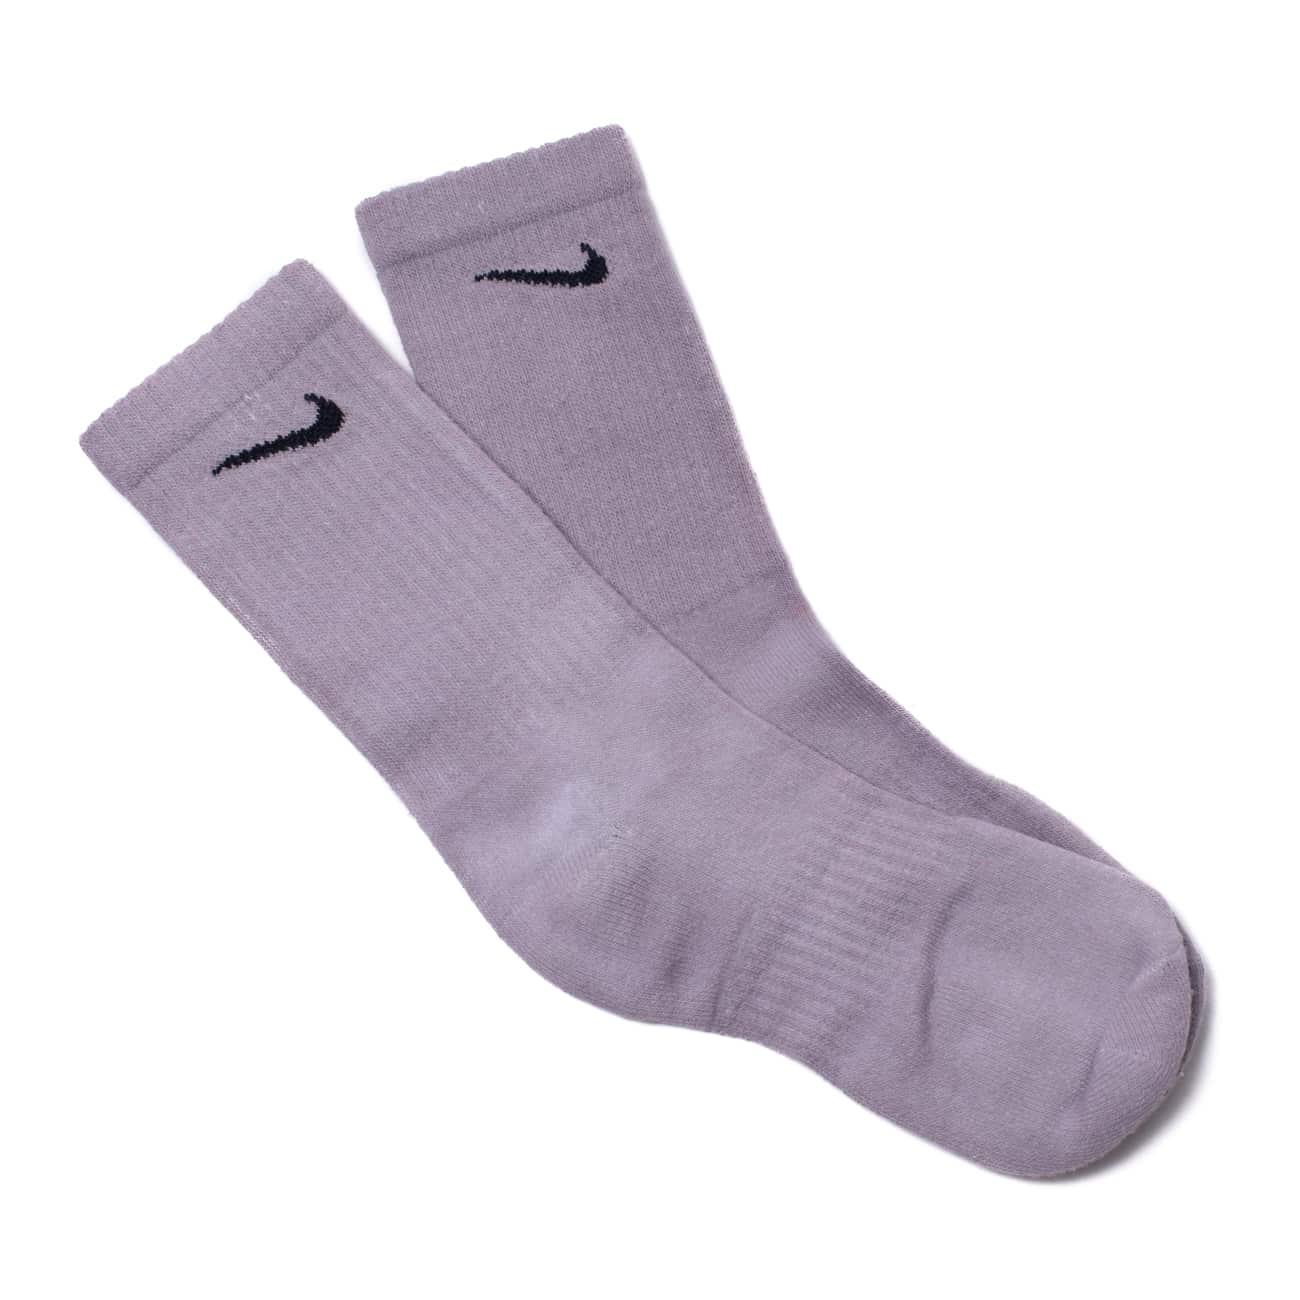 Nike Socks - grey